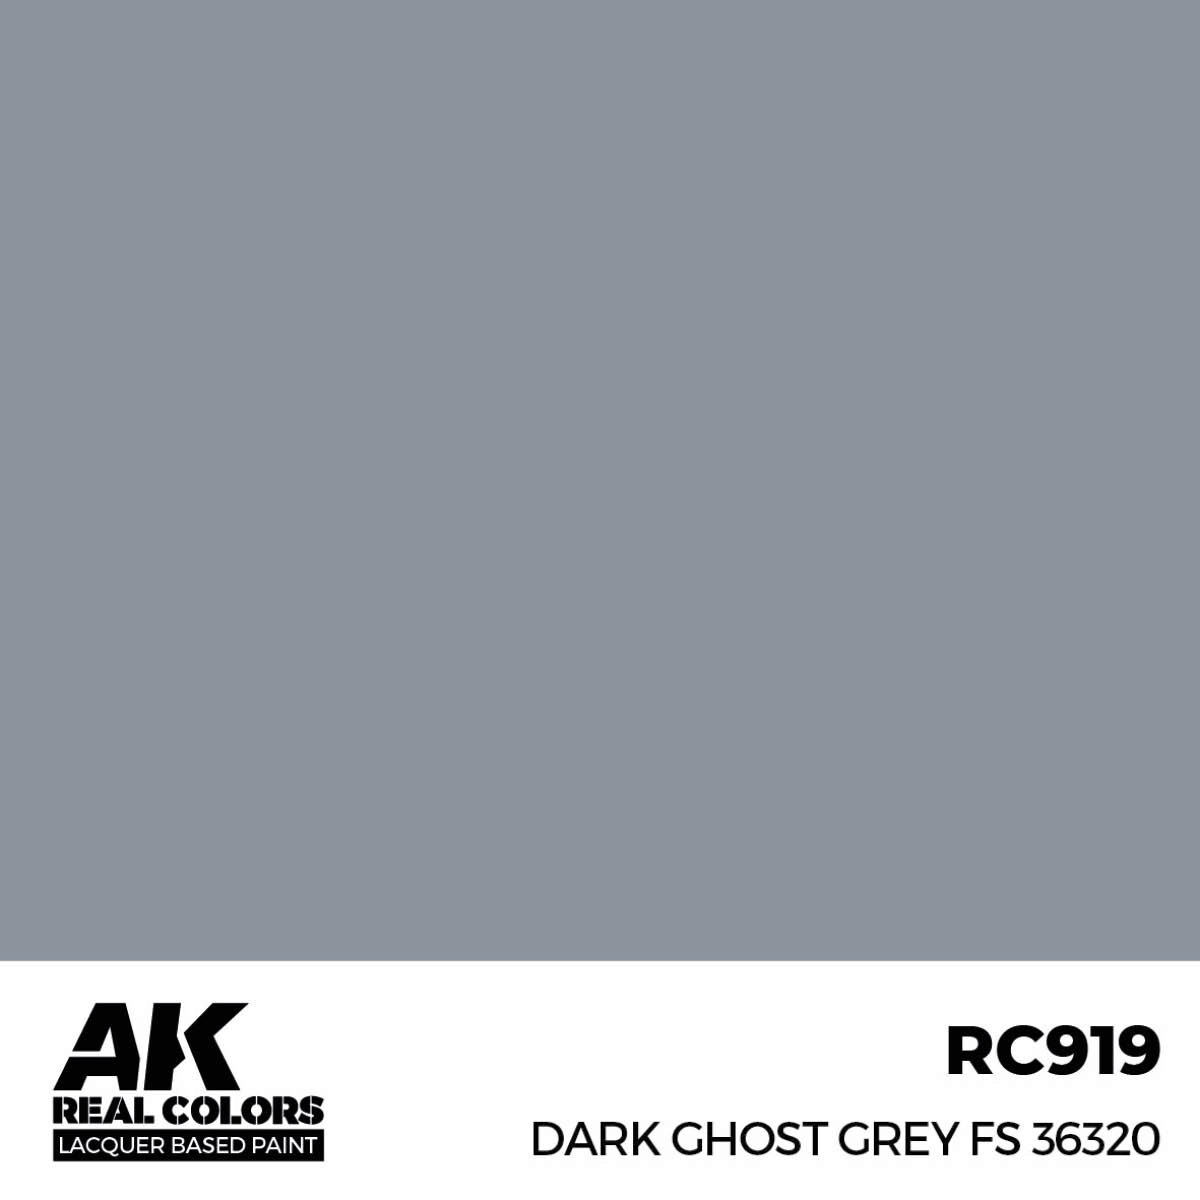 AK RC919 Real Colors Dark Ghost Grey FS 36320 17 ml.